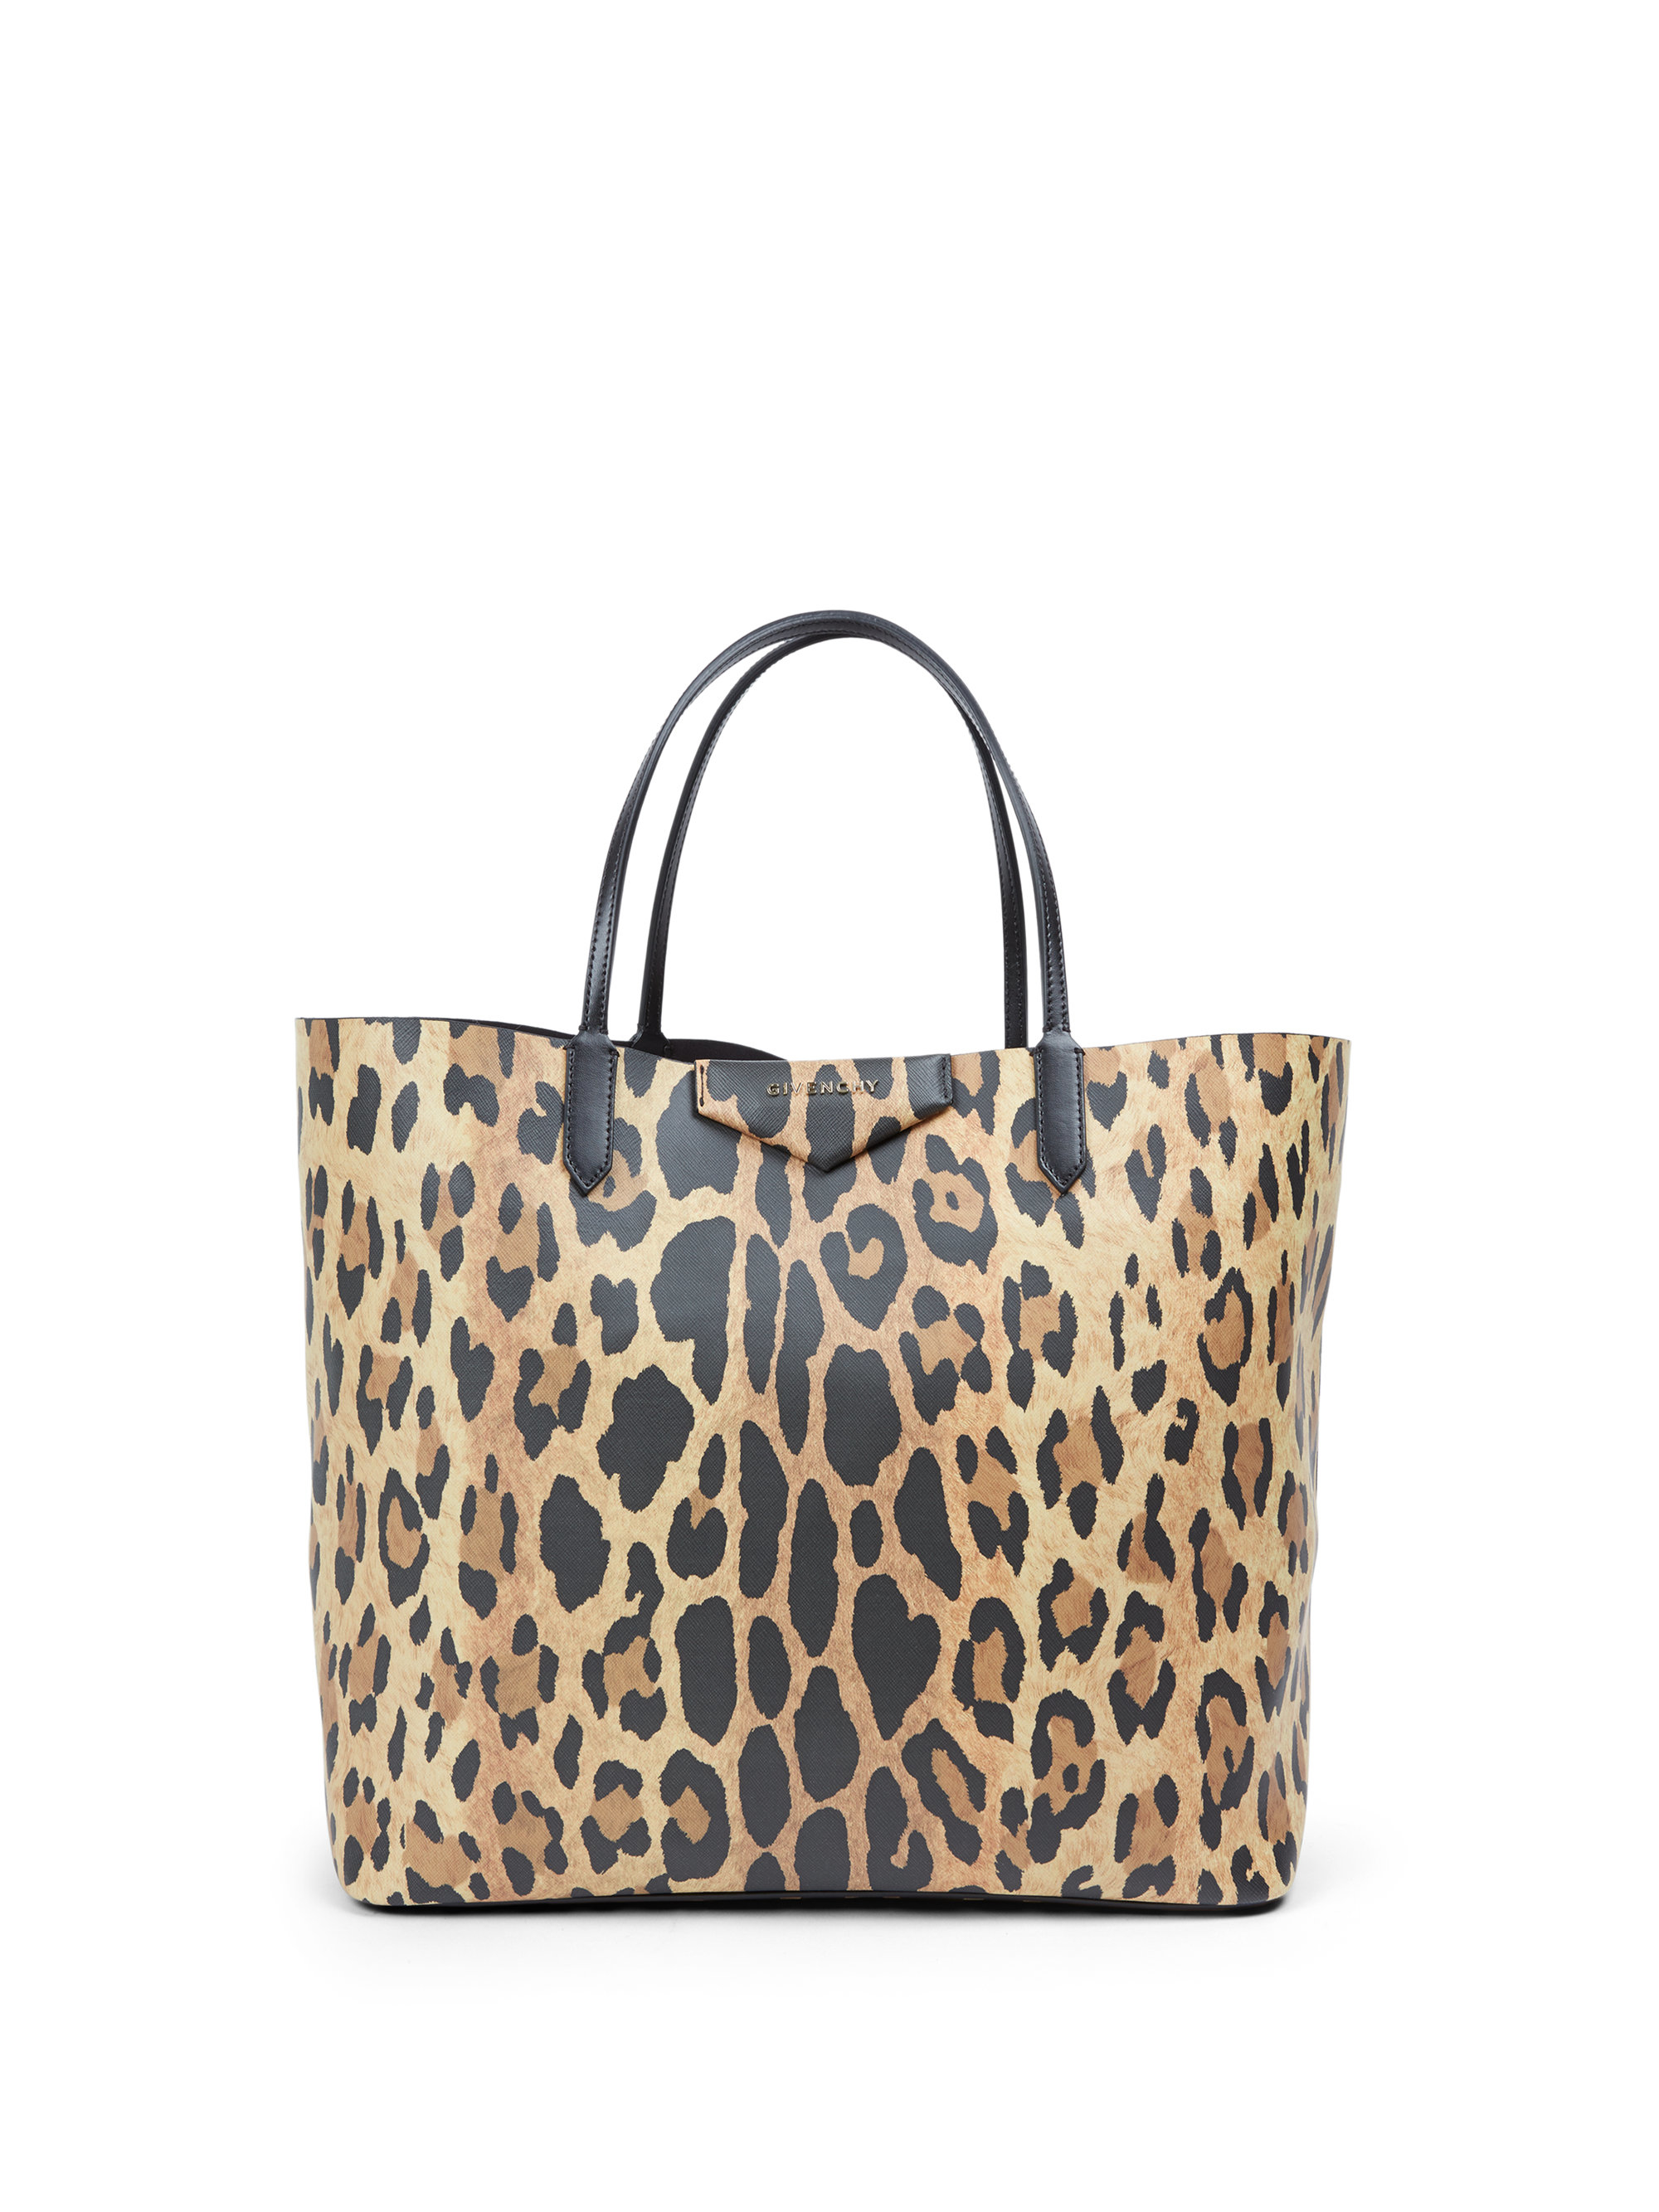 Lyst - Givenchy Mini 'lucrezia' Leopard Tote